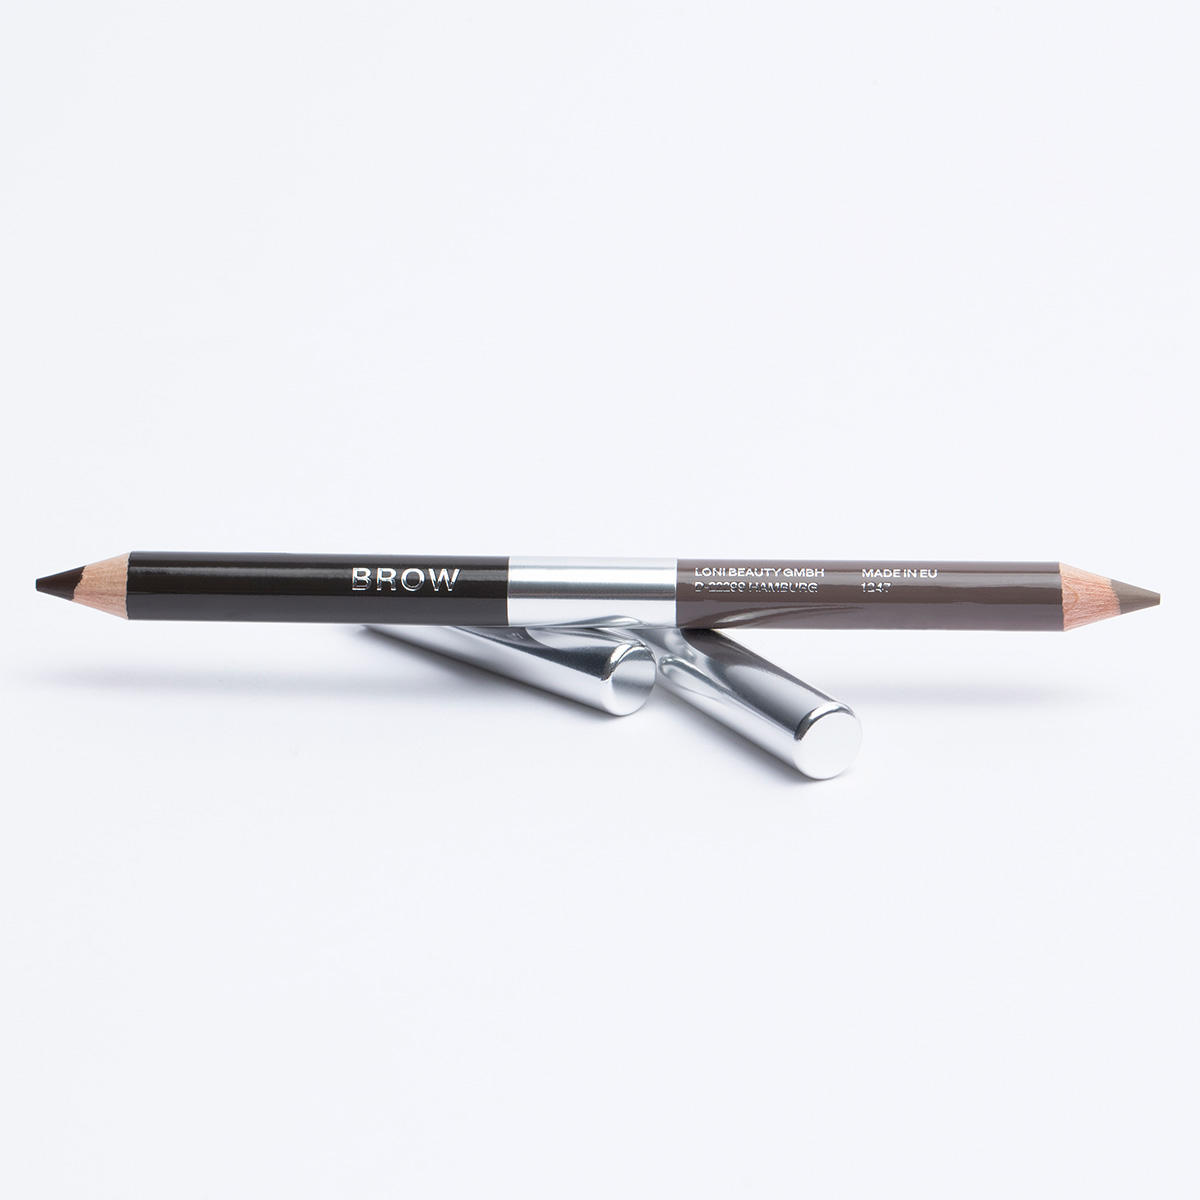 LONI BAUR Brow Pencil Duo 2 2 Braun & Blond 1 Stück - 2